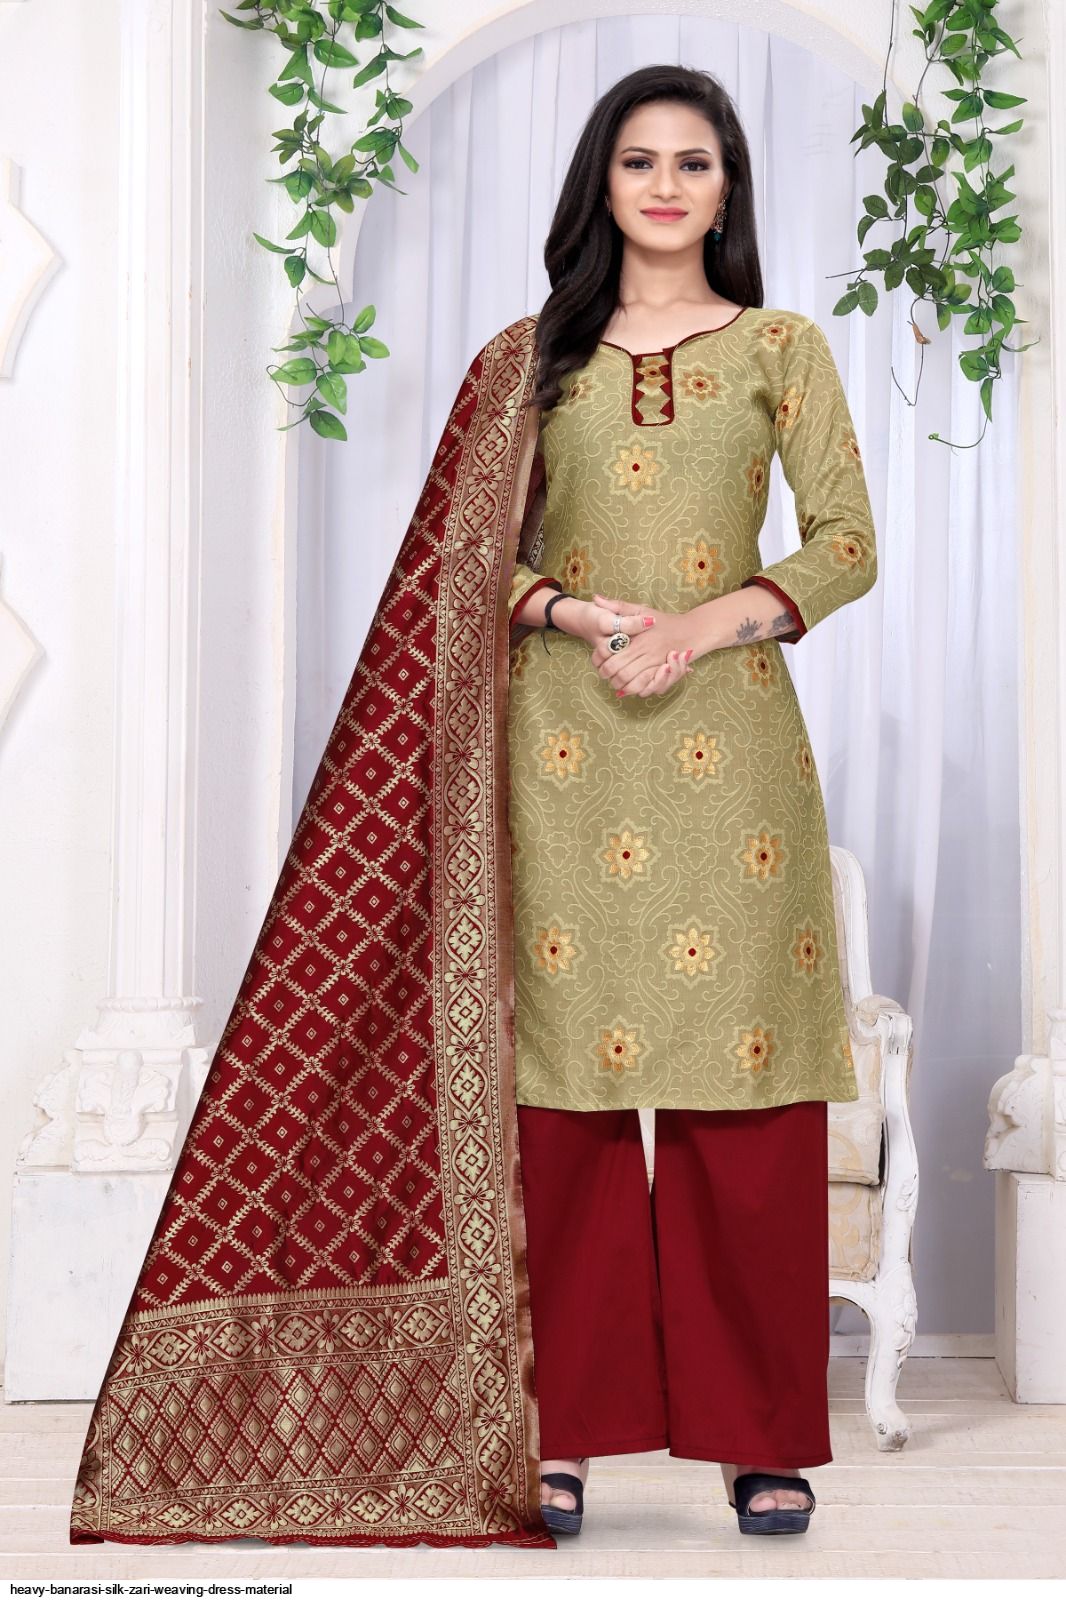 Make beautiful wedding wear using our banarasi silk fabric